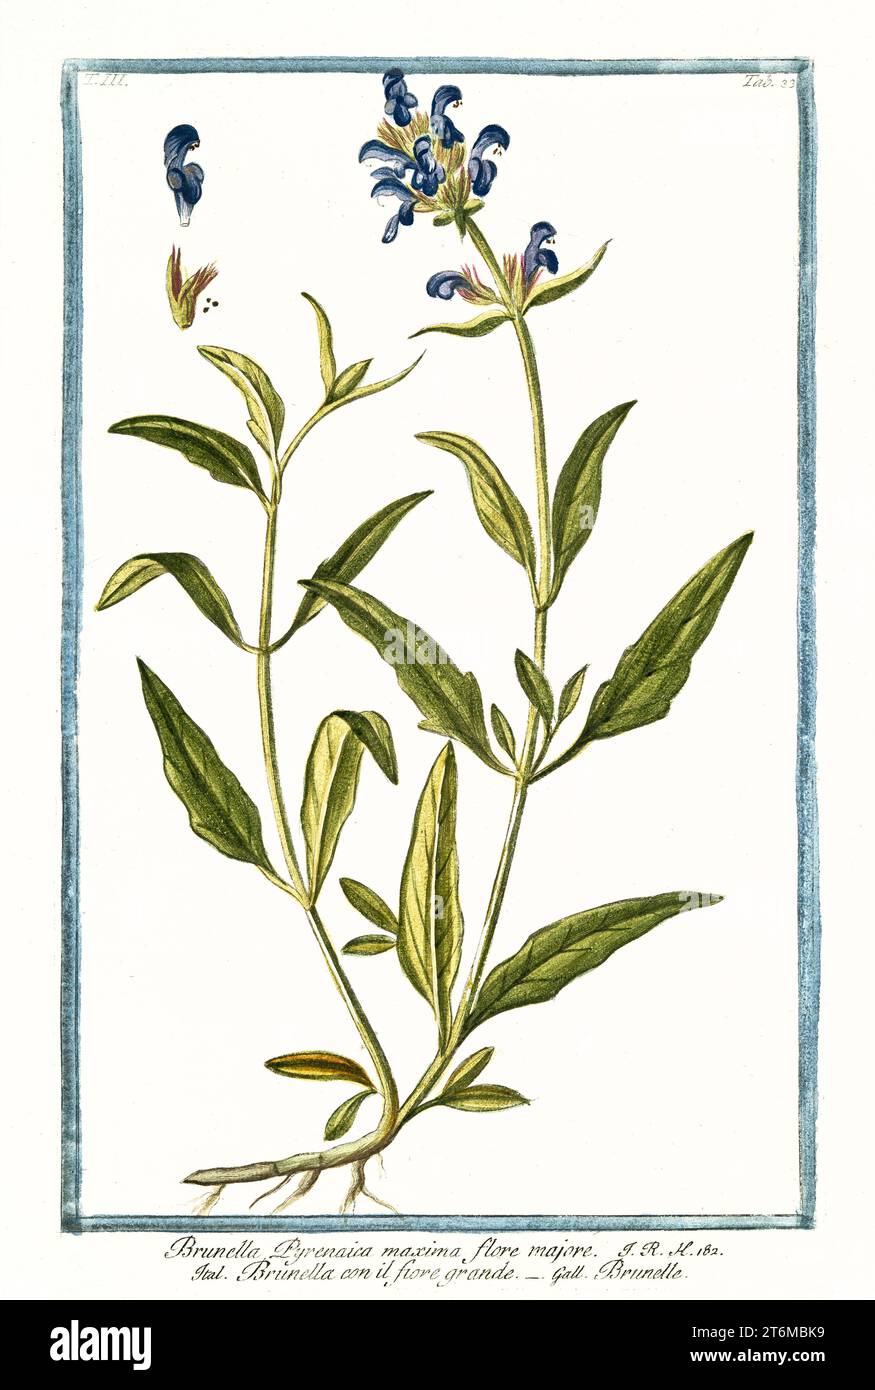 Old illustration of  Prunella grandiflora (Large-flowered selfheal). By G. Bonelli on Hortus Romanus, publ. N. Martelli, Rome, 1772 – 93 Stock Photo